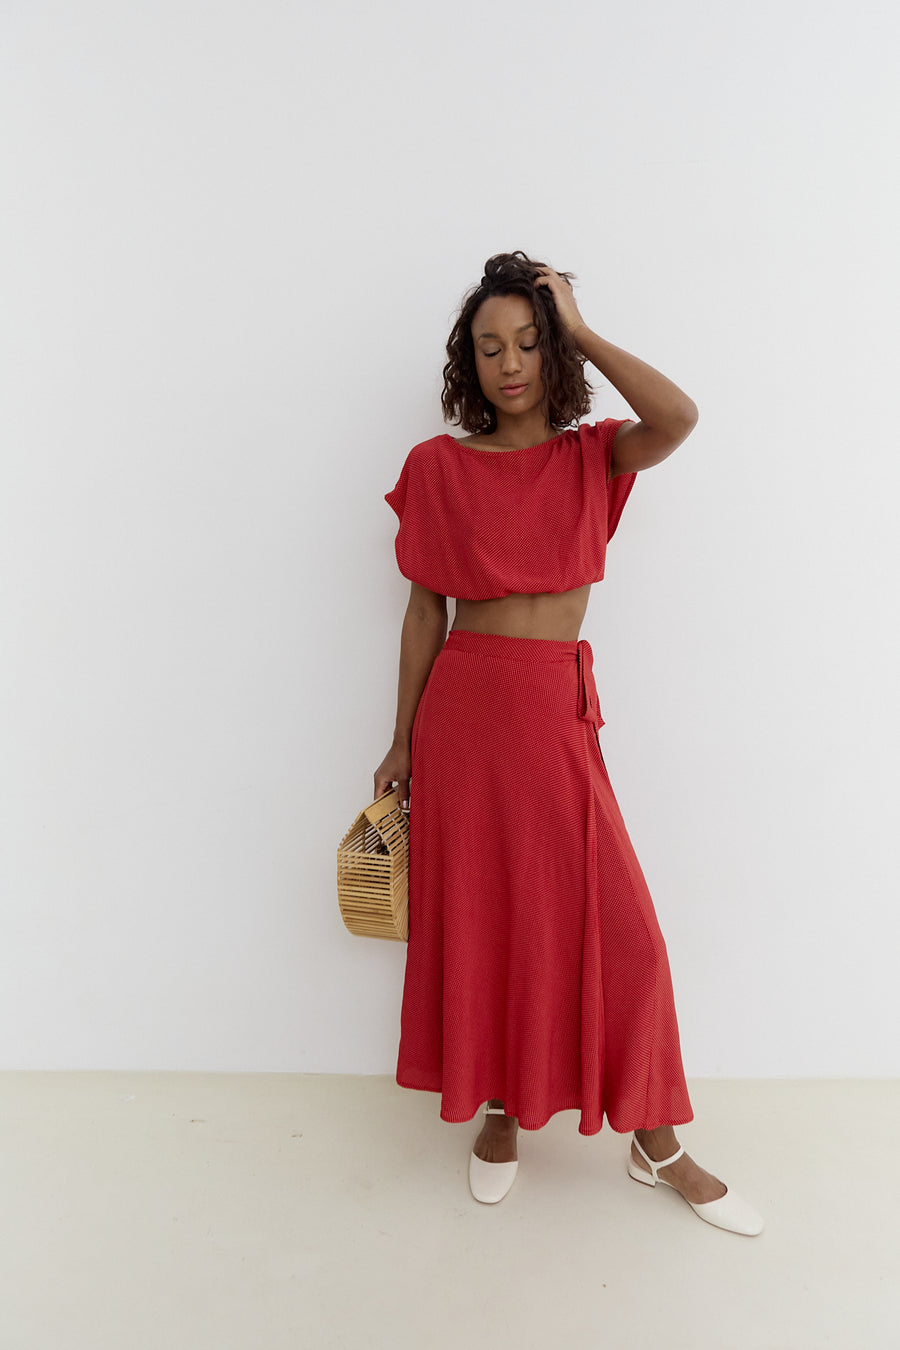 Meij-Nina Wrap Skirt (polka dots red), daily wrap skirt